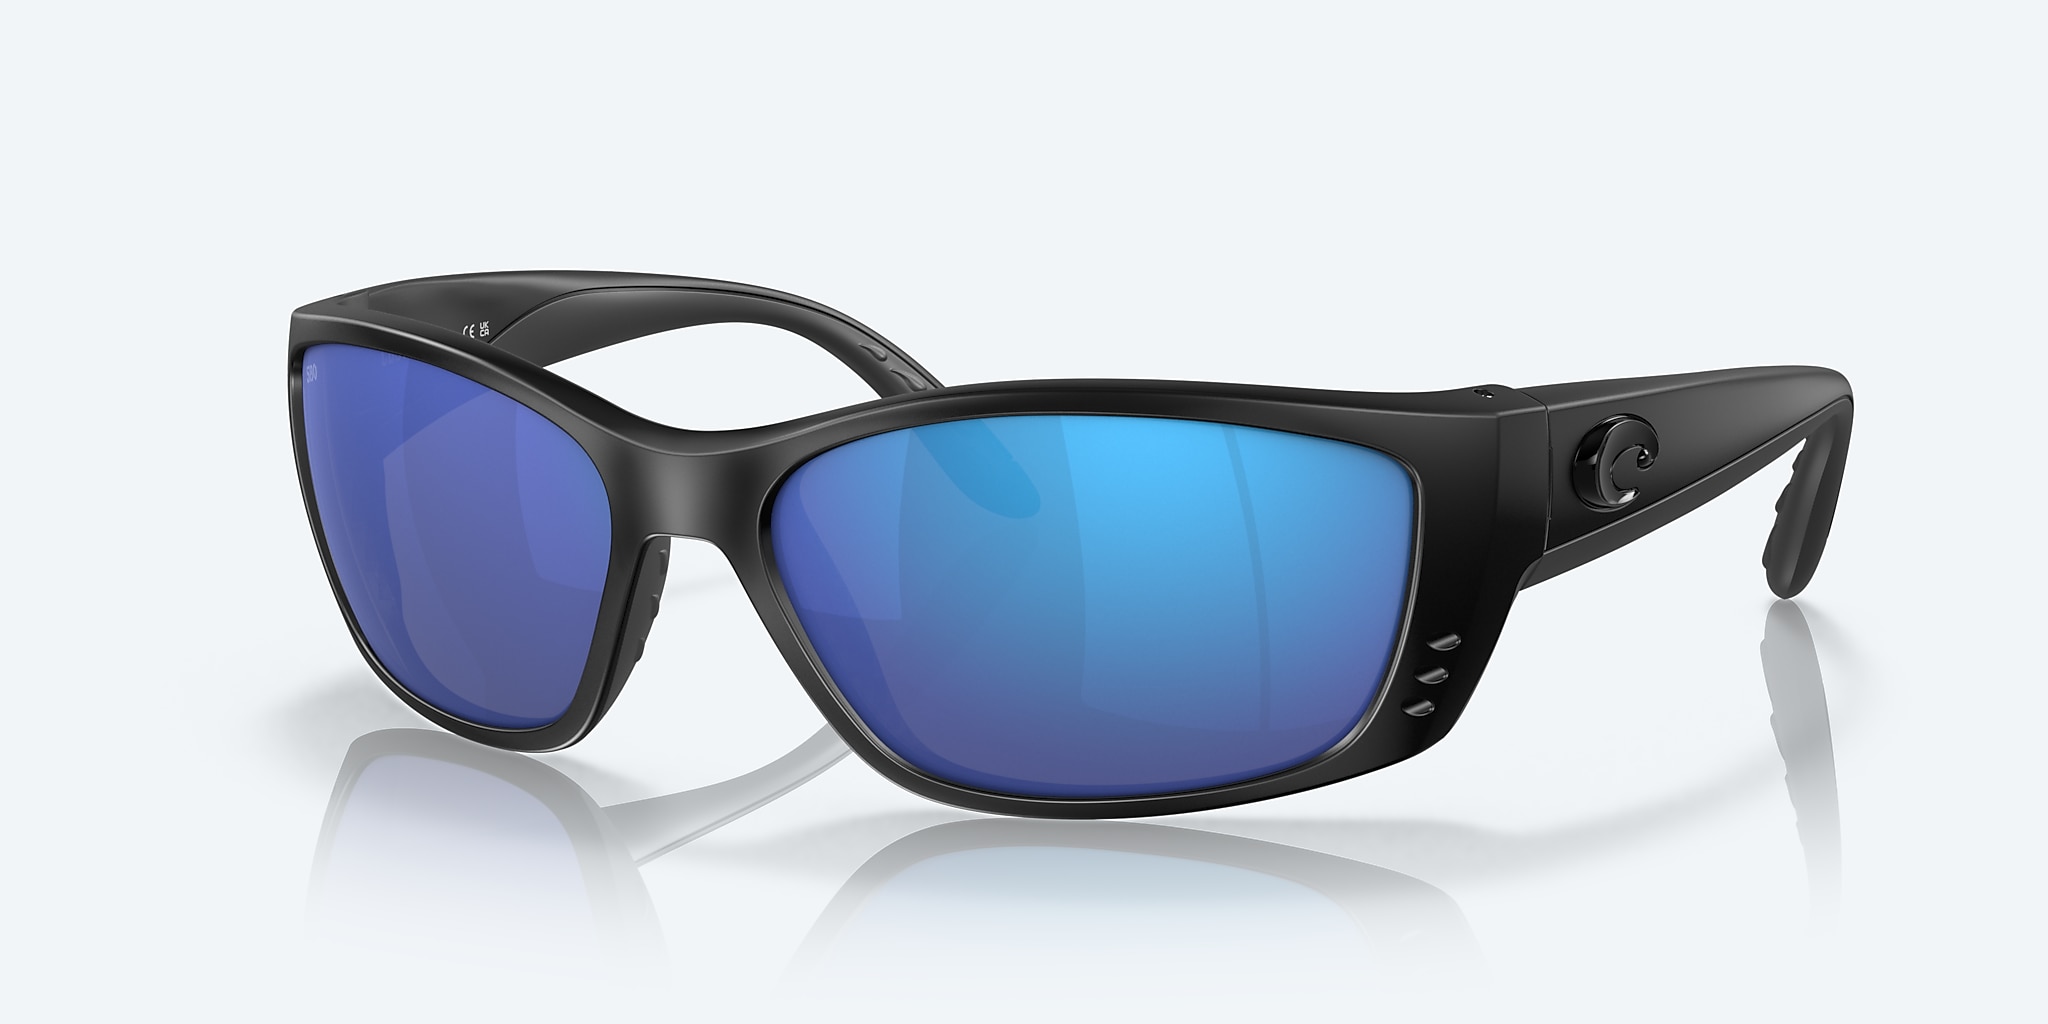 Fisch Polarized Sunglasses in Blue Mirror